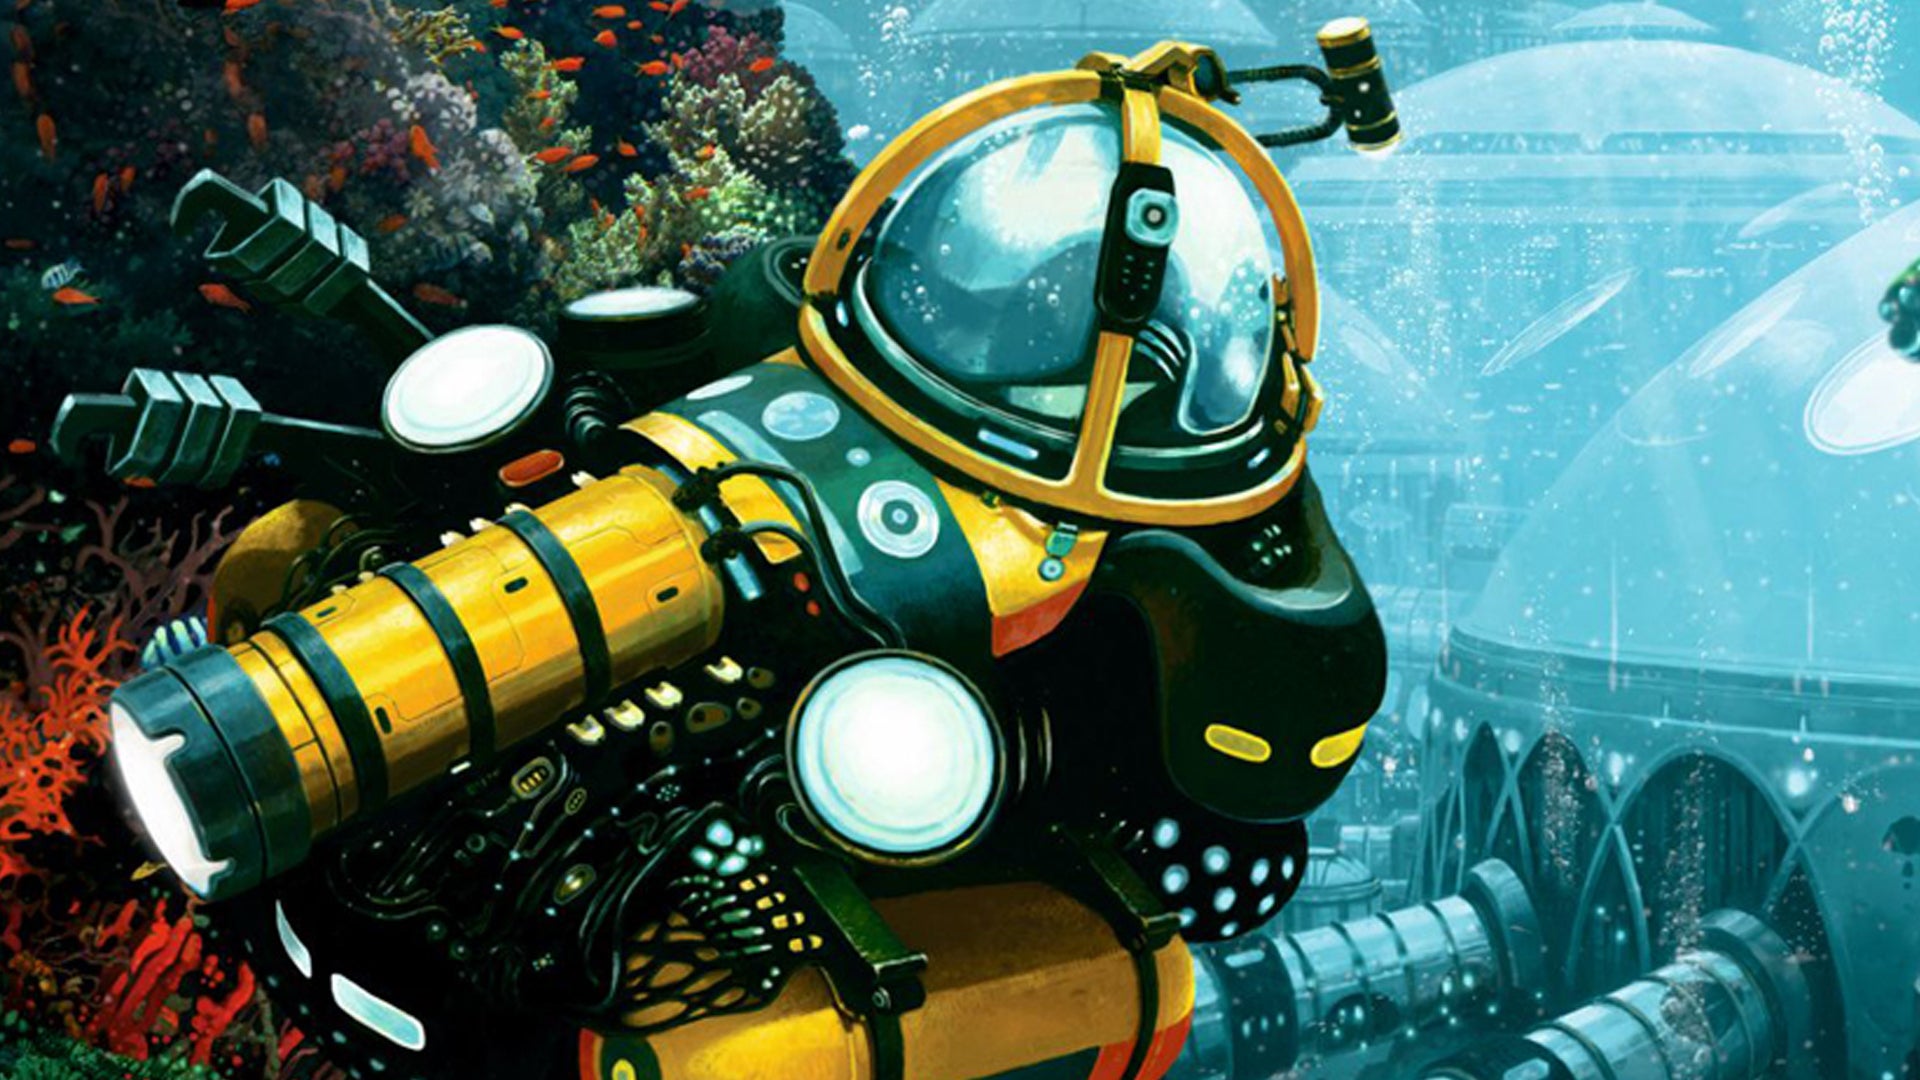 Underwater Cities board game box artwork